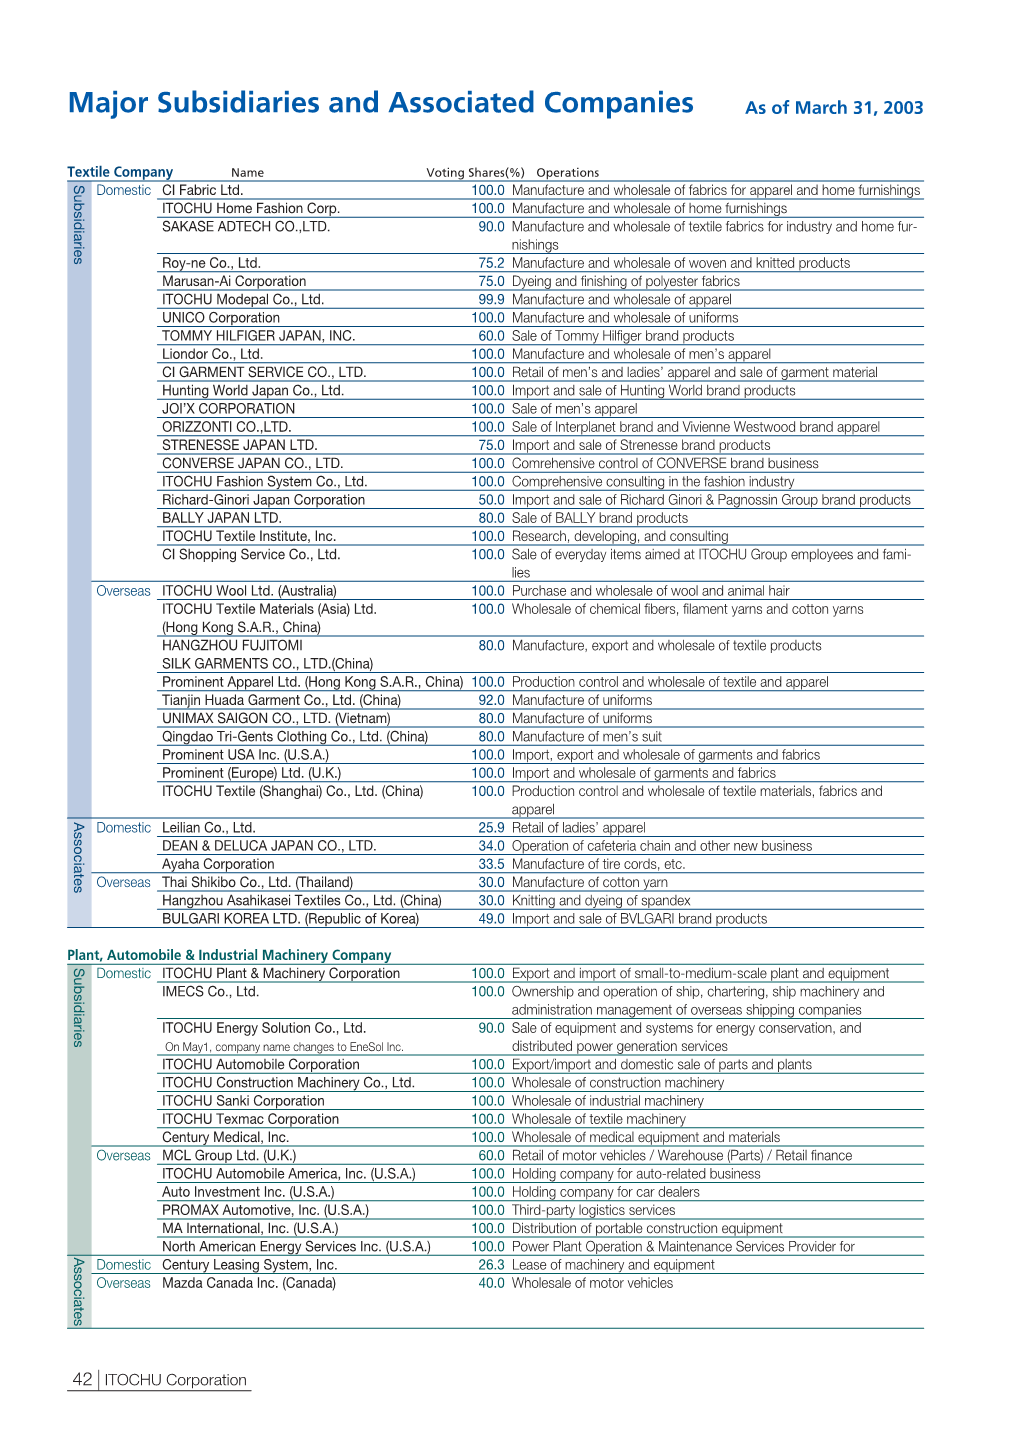 Major Subsidiaries and Associated Companies (PDF 86KB)